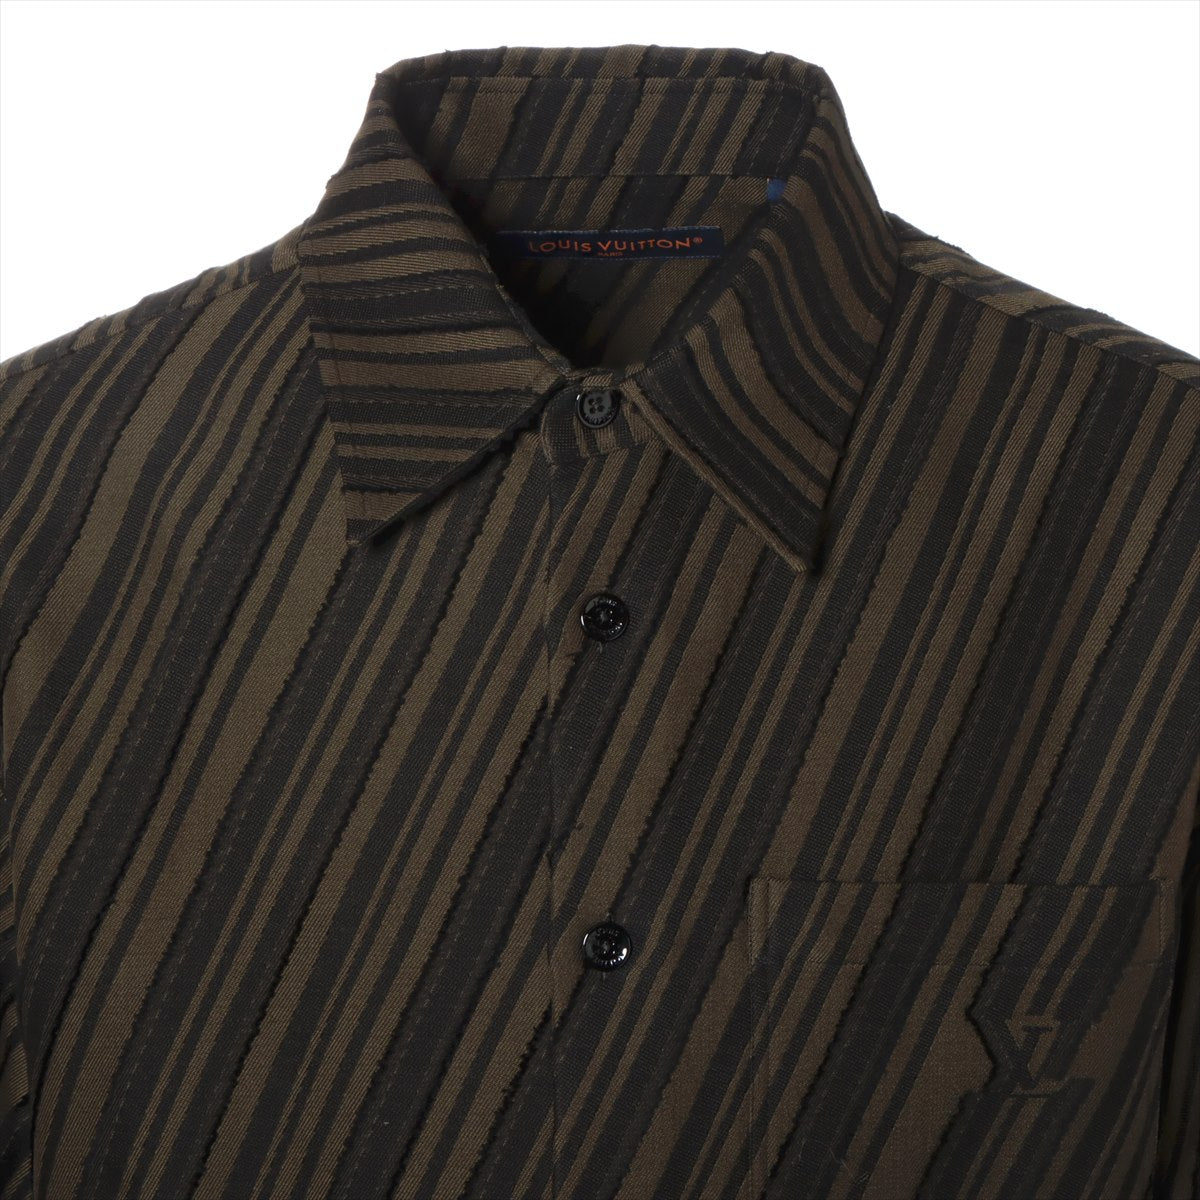 Louis Vuitton 24SS Cotton & Wool Shirt L Men's Black x khaki  RM241M 1AFAU6 cotton jacquard shirt